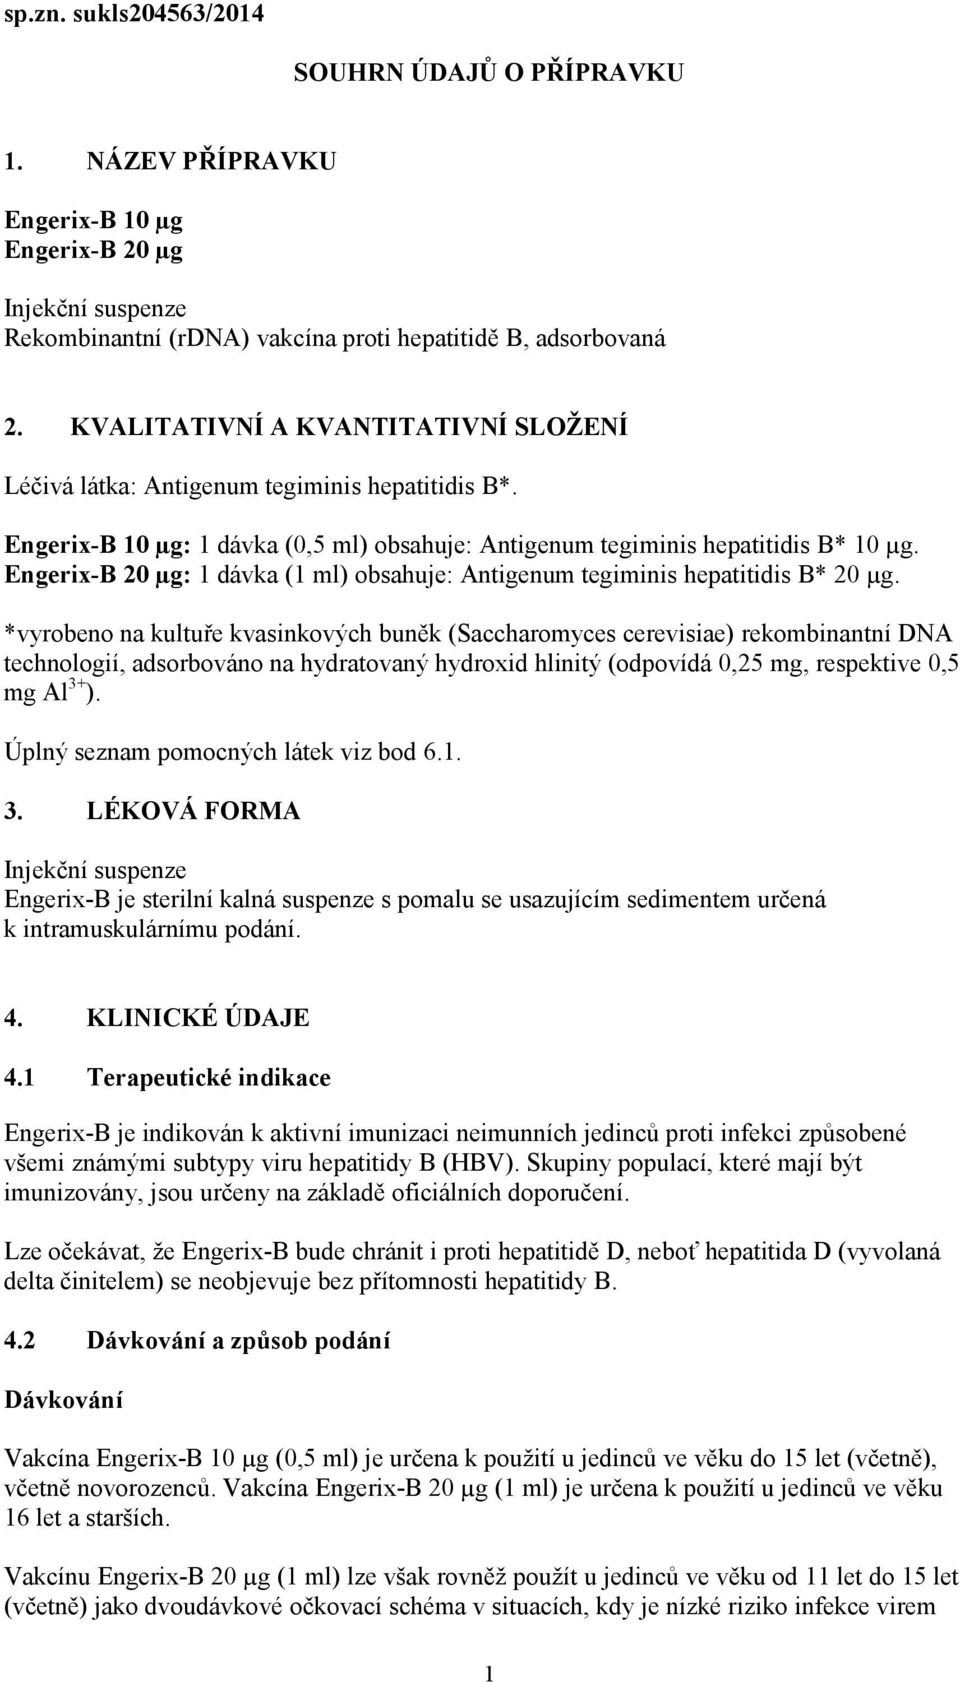 Engerix-B 20 µg: 1 dávka (1 ml) obsahuje: Antigenum tegiminis hepatitidis B* 20 µg.